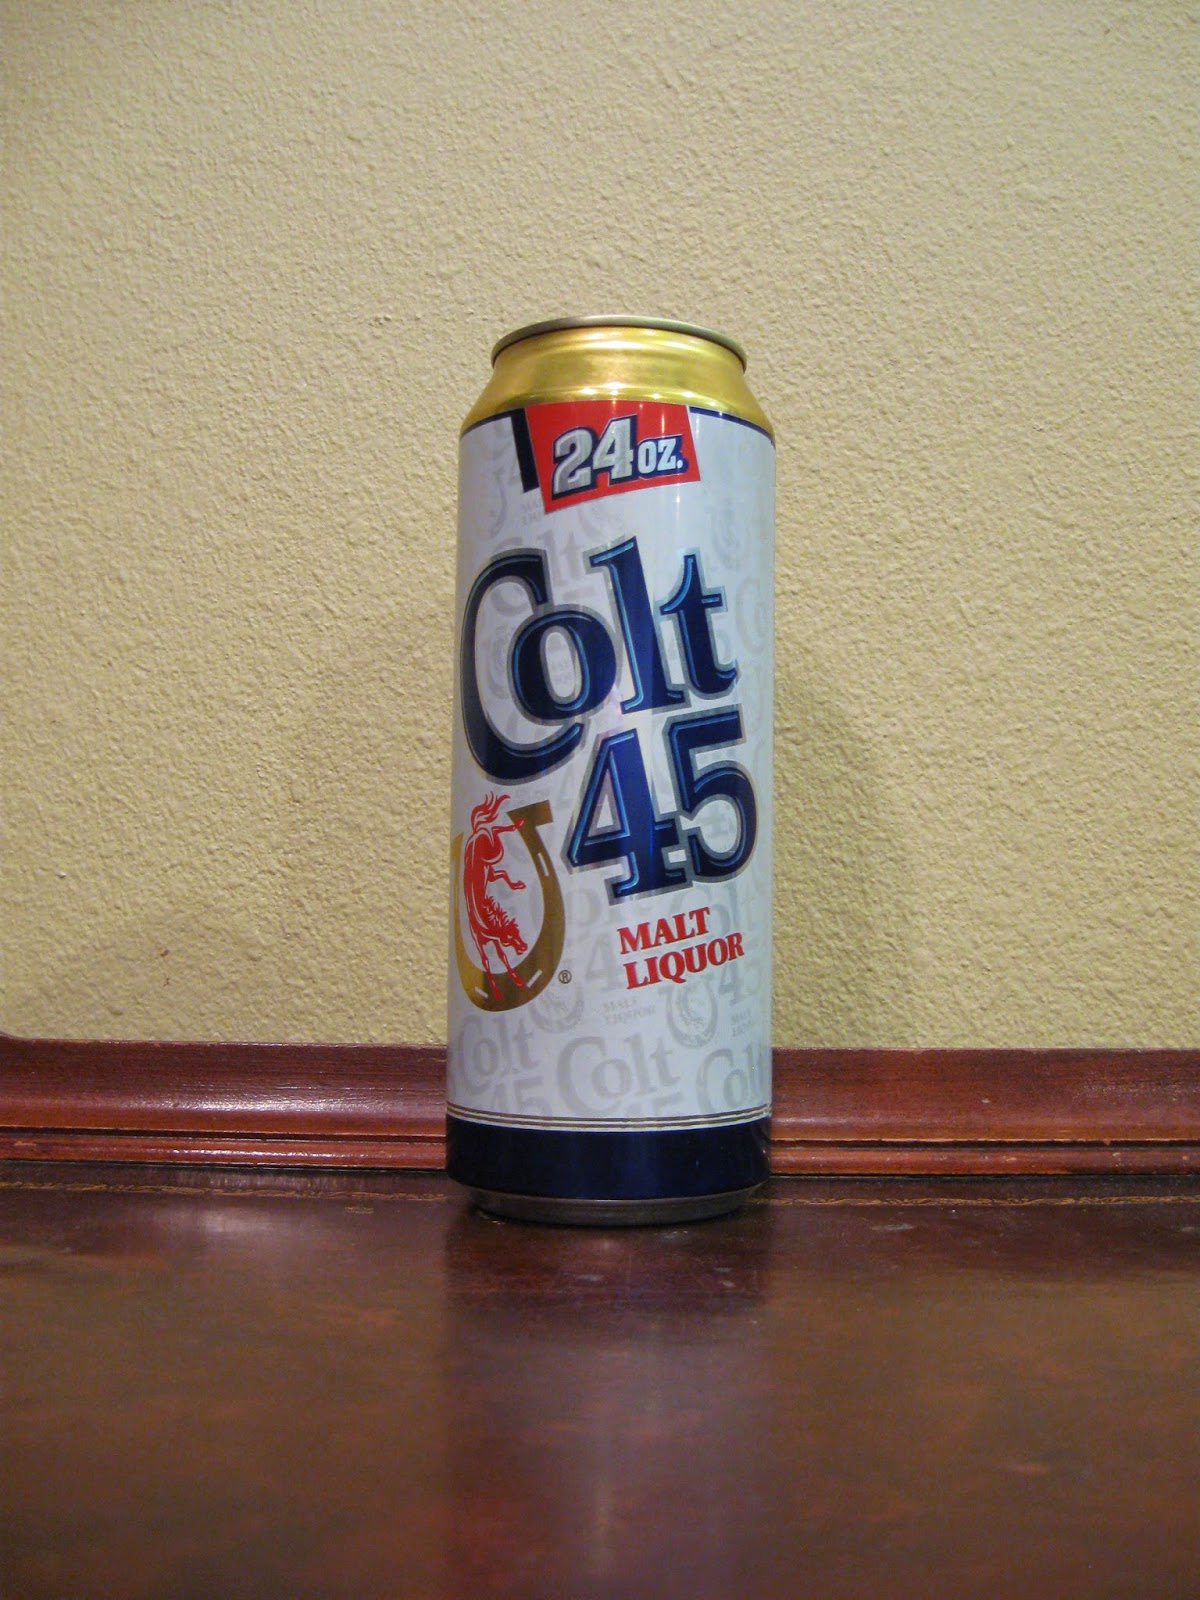 Colt 45 Malt Liquor.